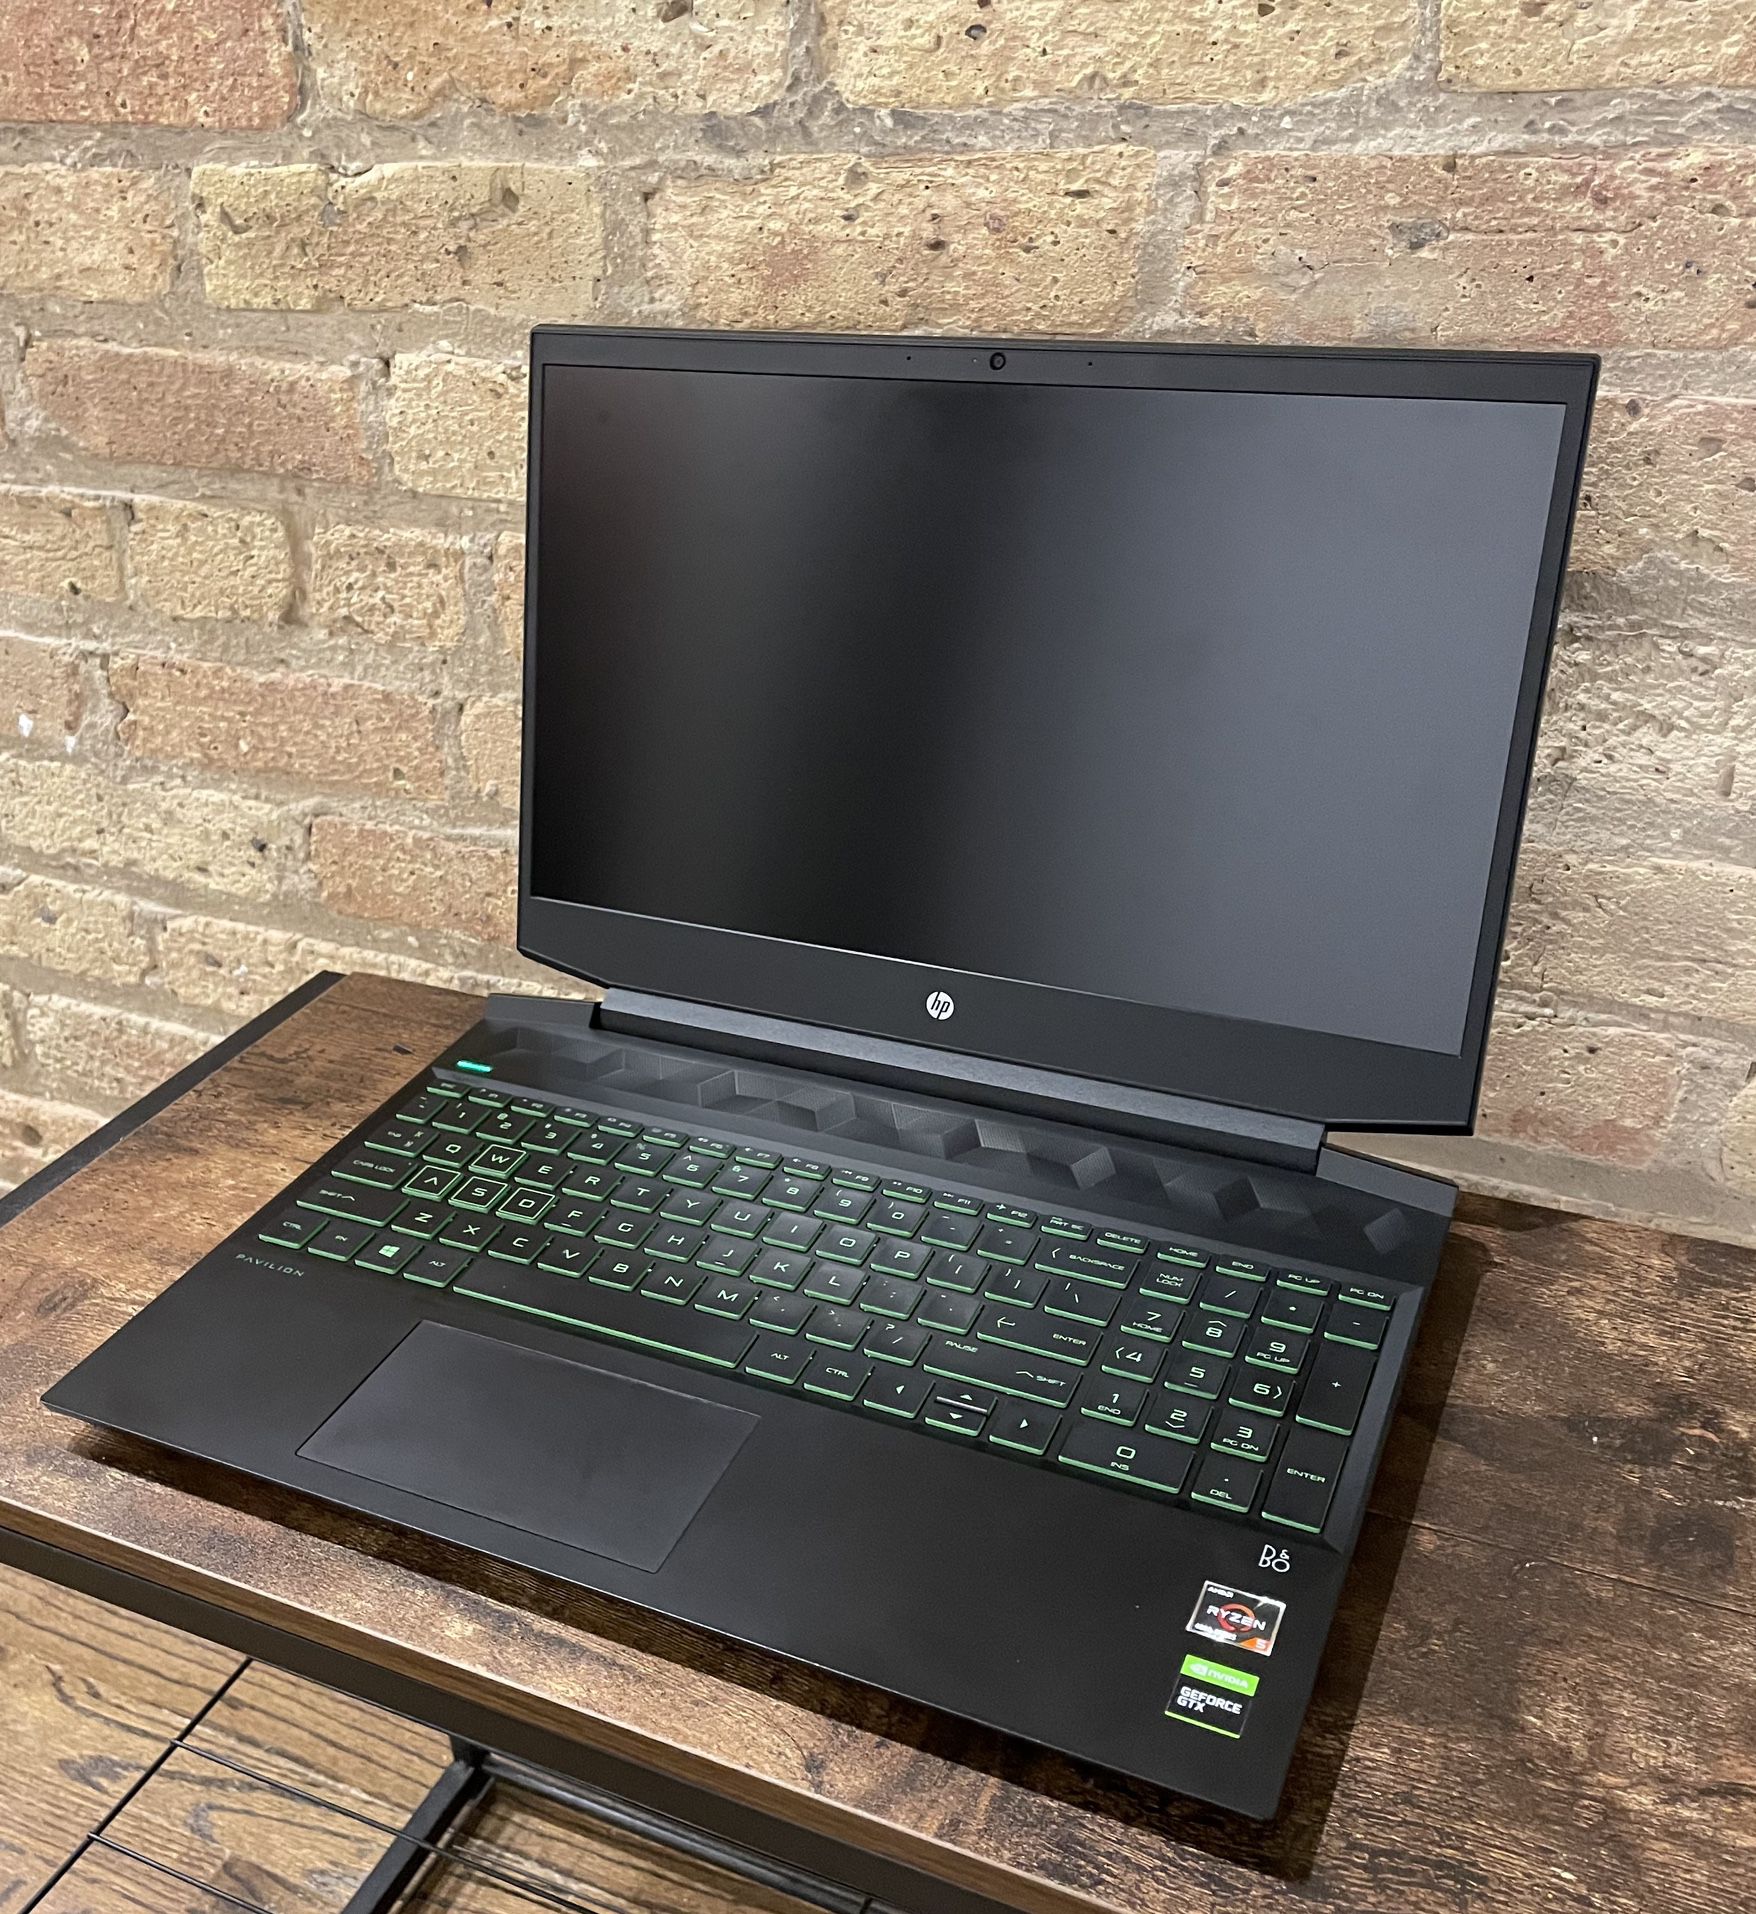 HP Pavilion Gaming Laptop (Model: 15-ec1010nr)